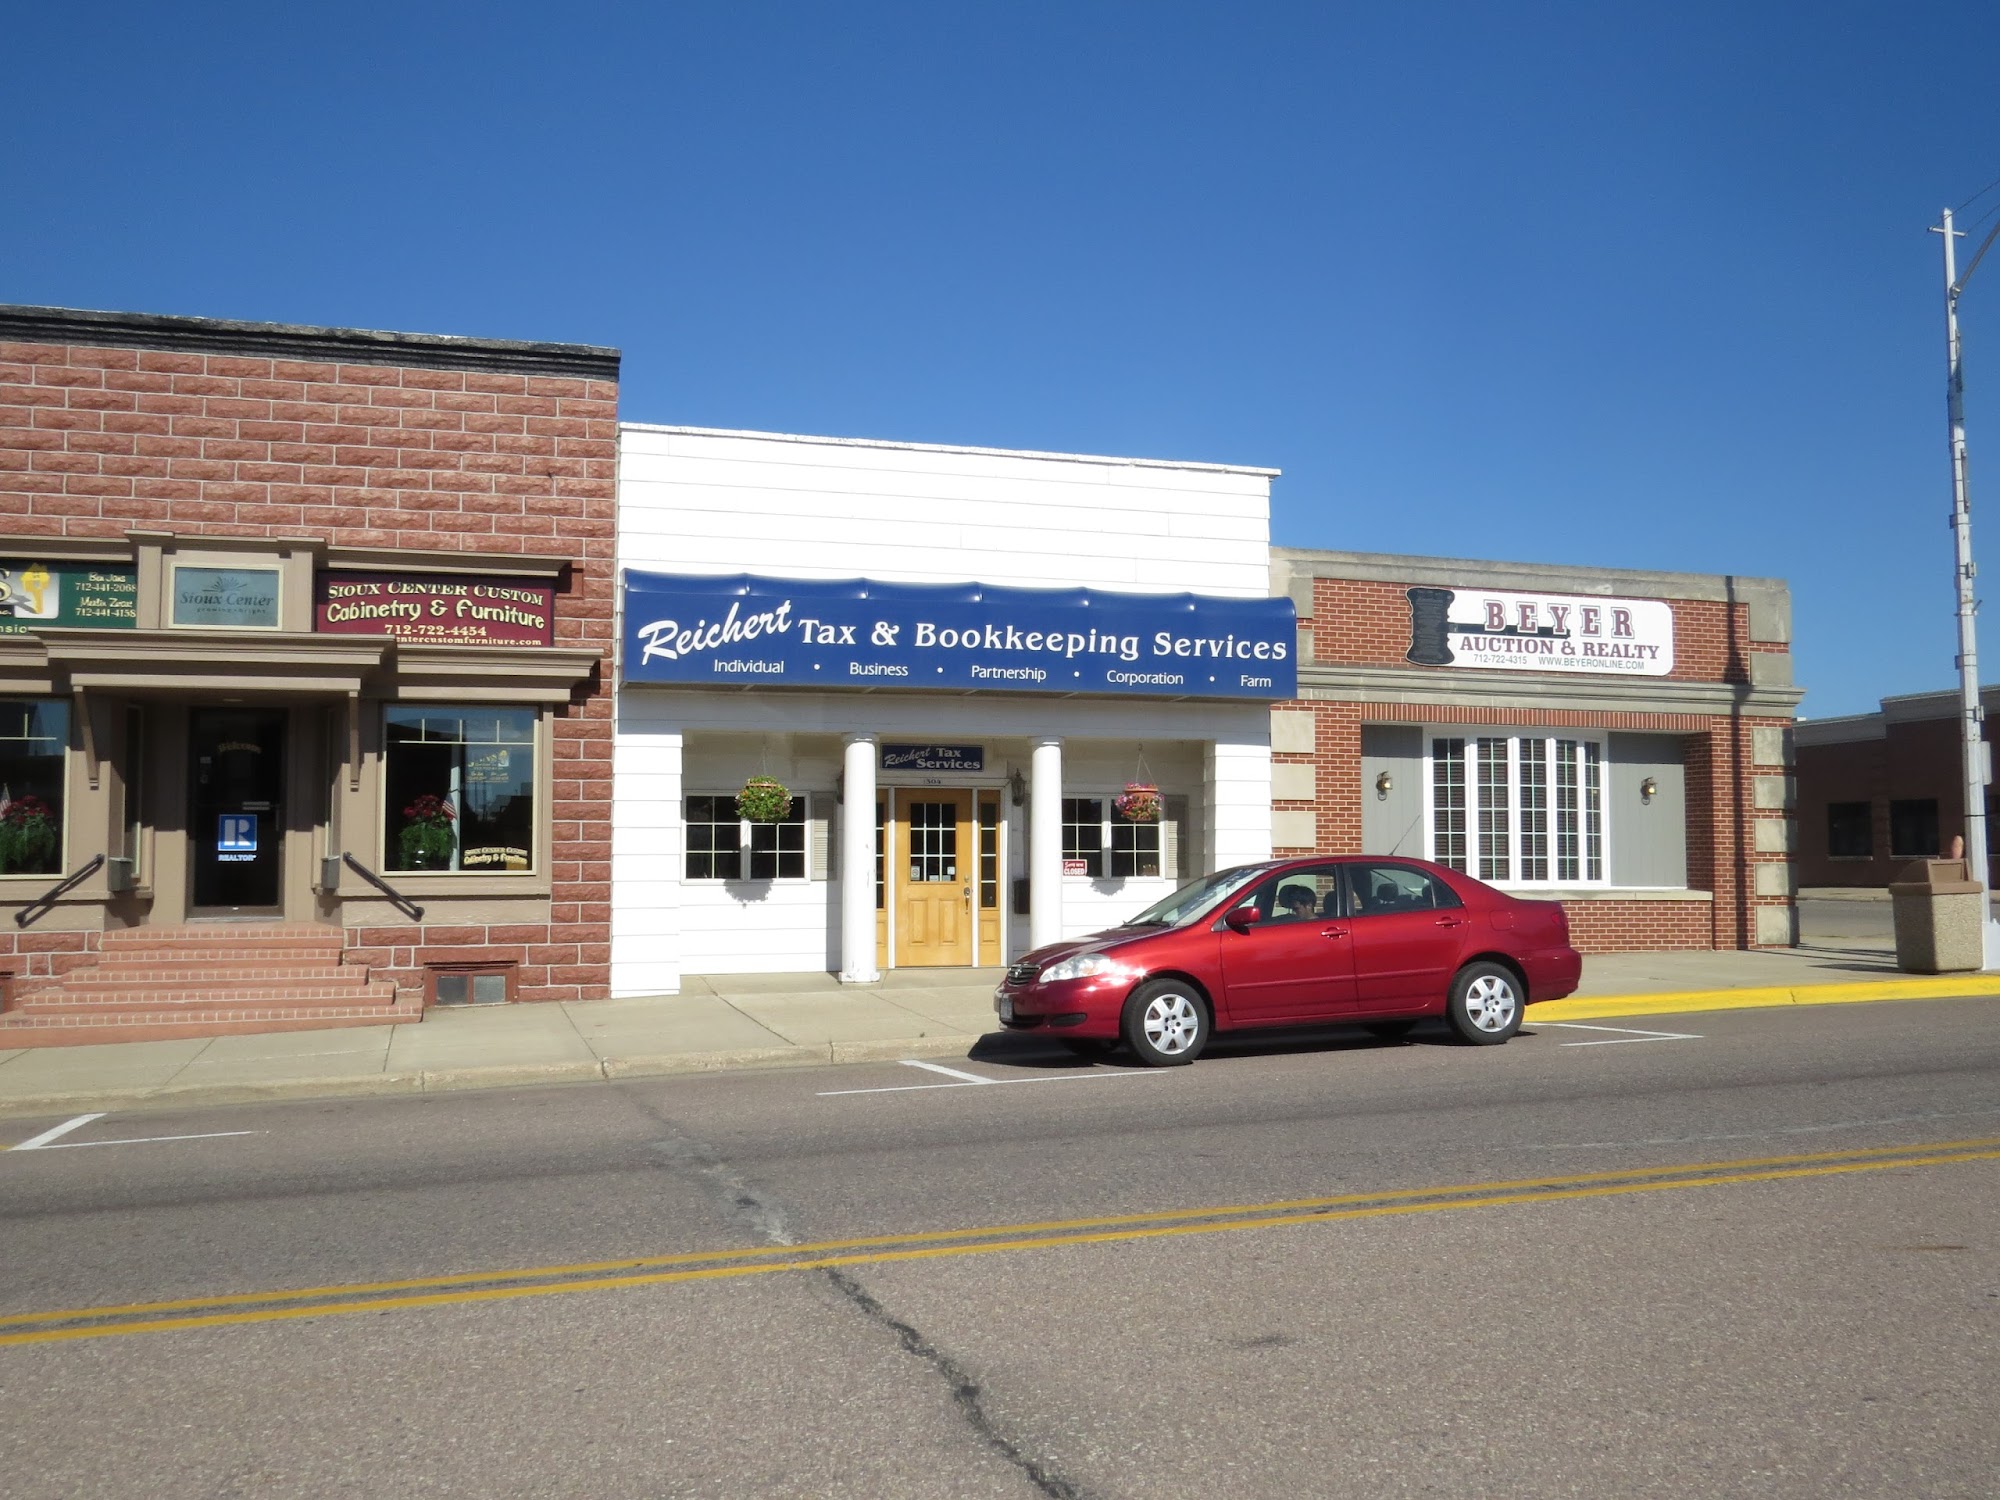 Reichert Tax & Bookkeeping Services 304 N Main Ave, Sioux Center Iowa 51250